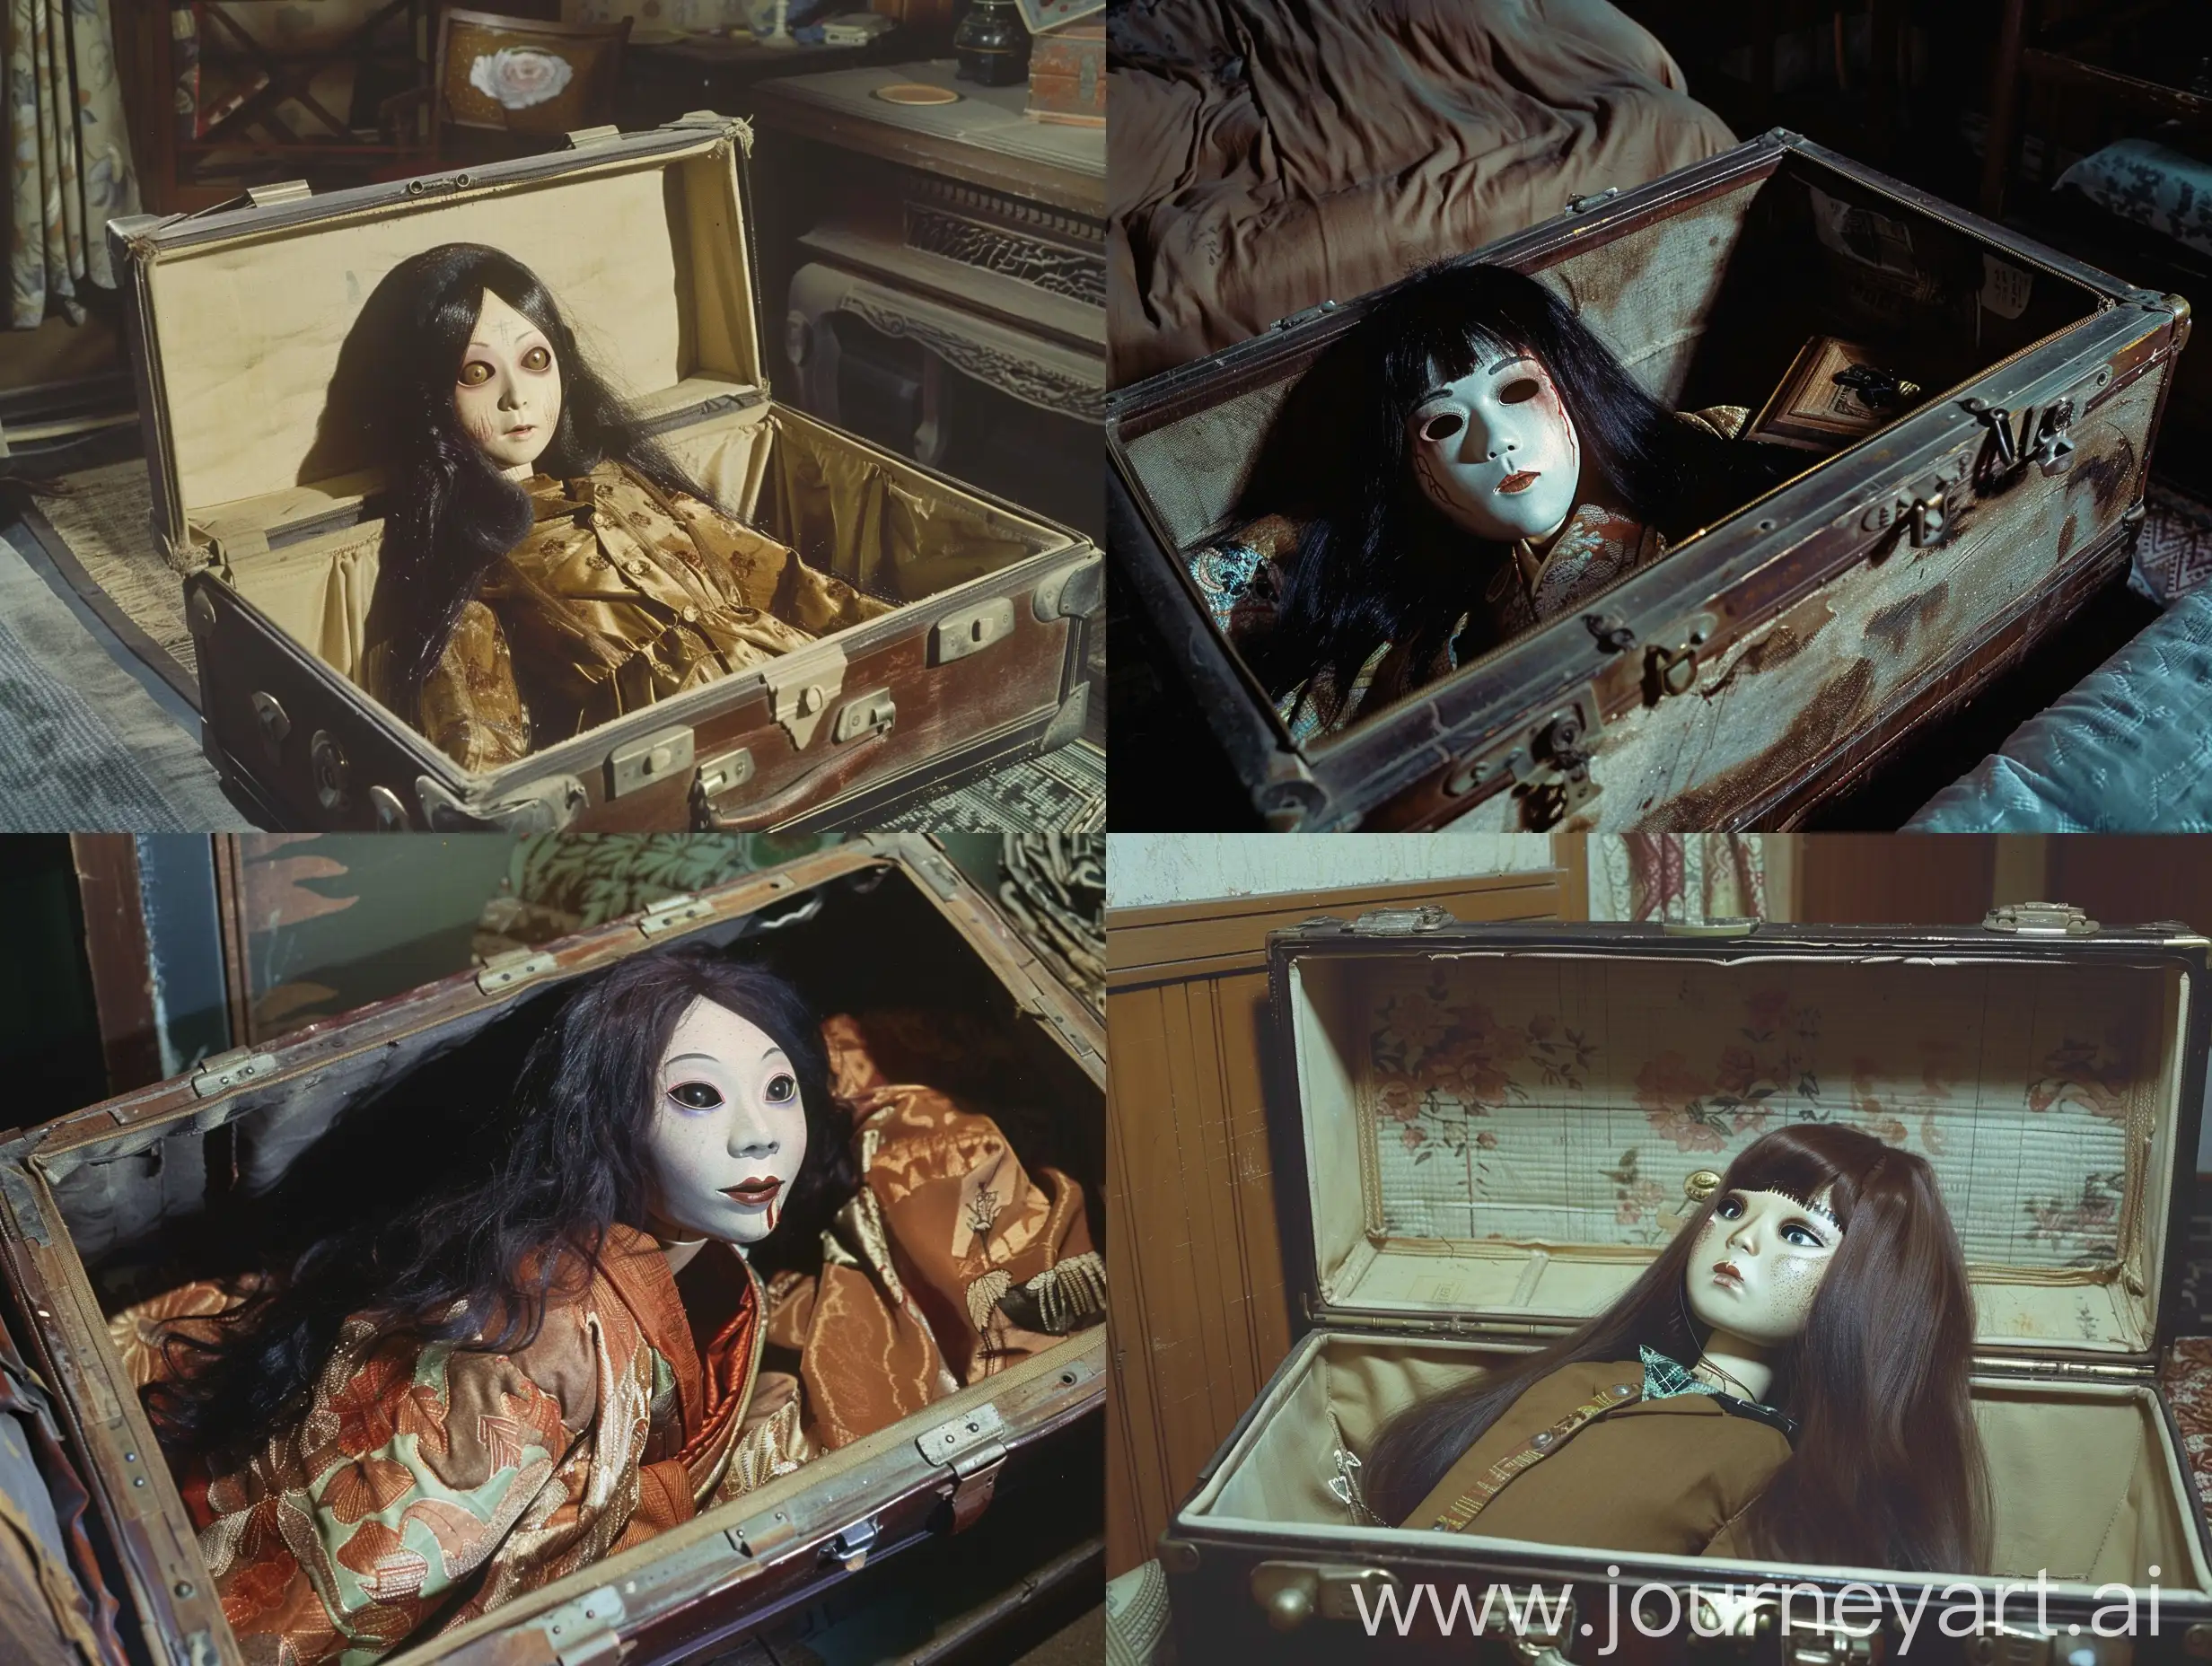 Japanese-Yokai-Woman-Puppet-Horror-Scene-in-Old-Hotel-Room